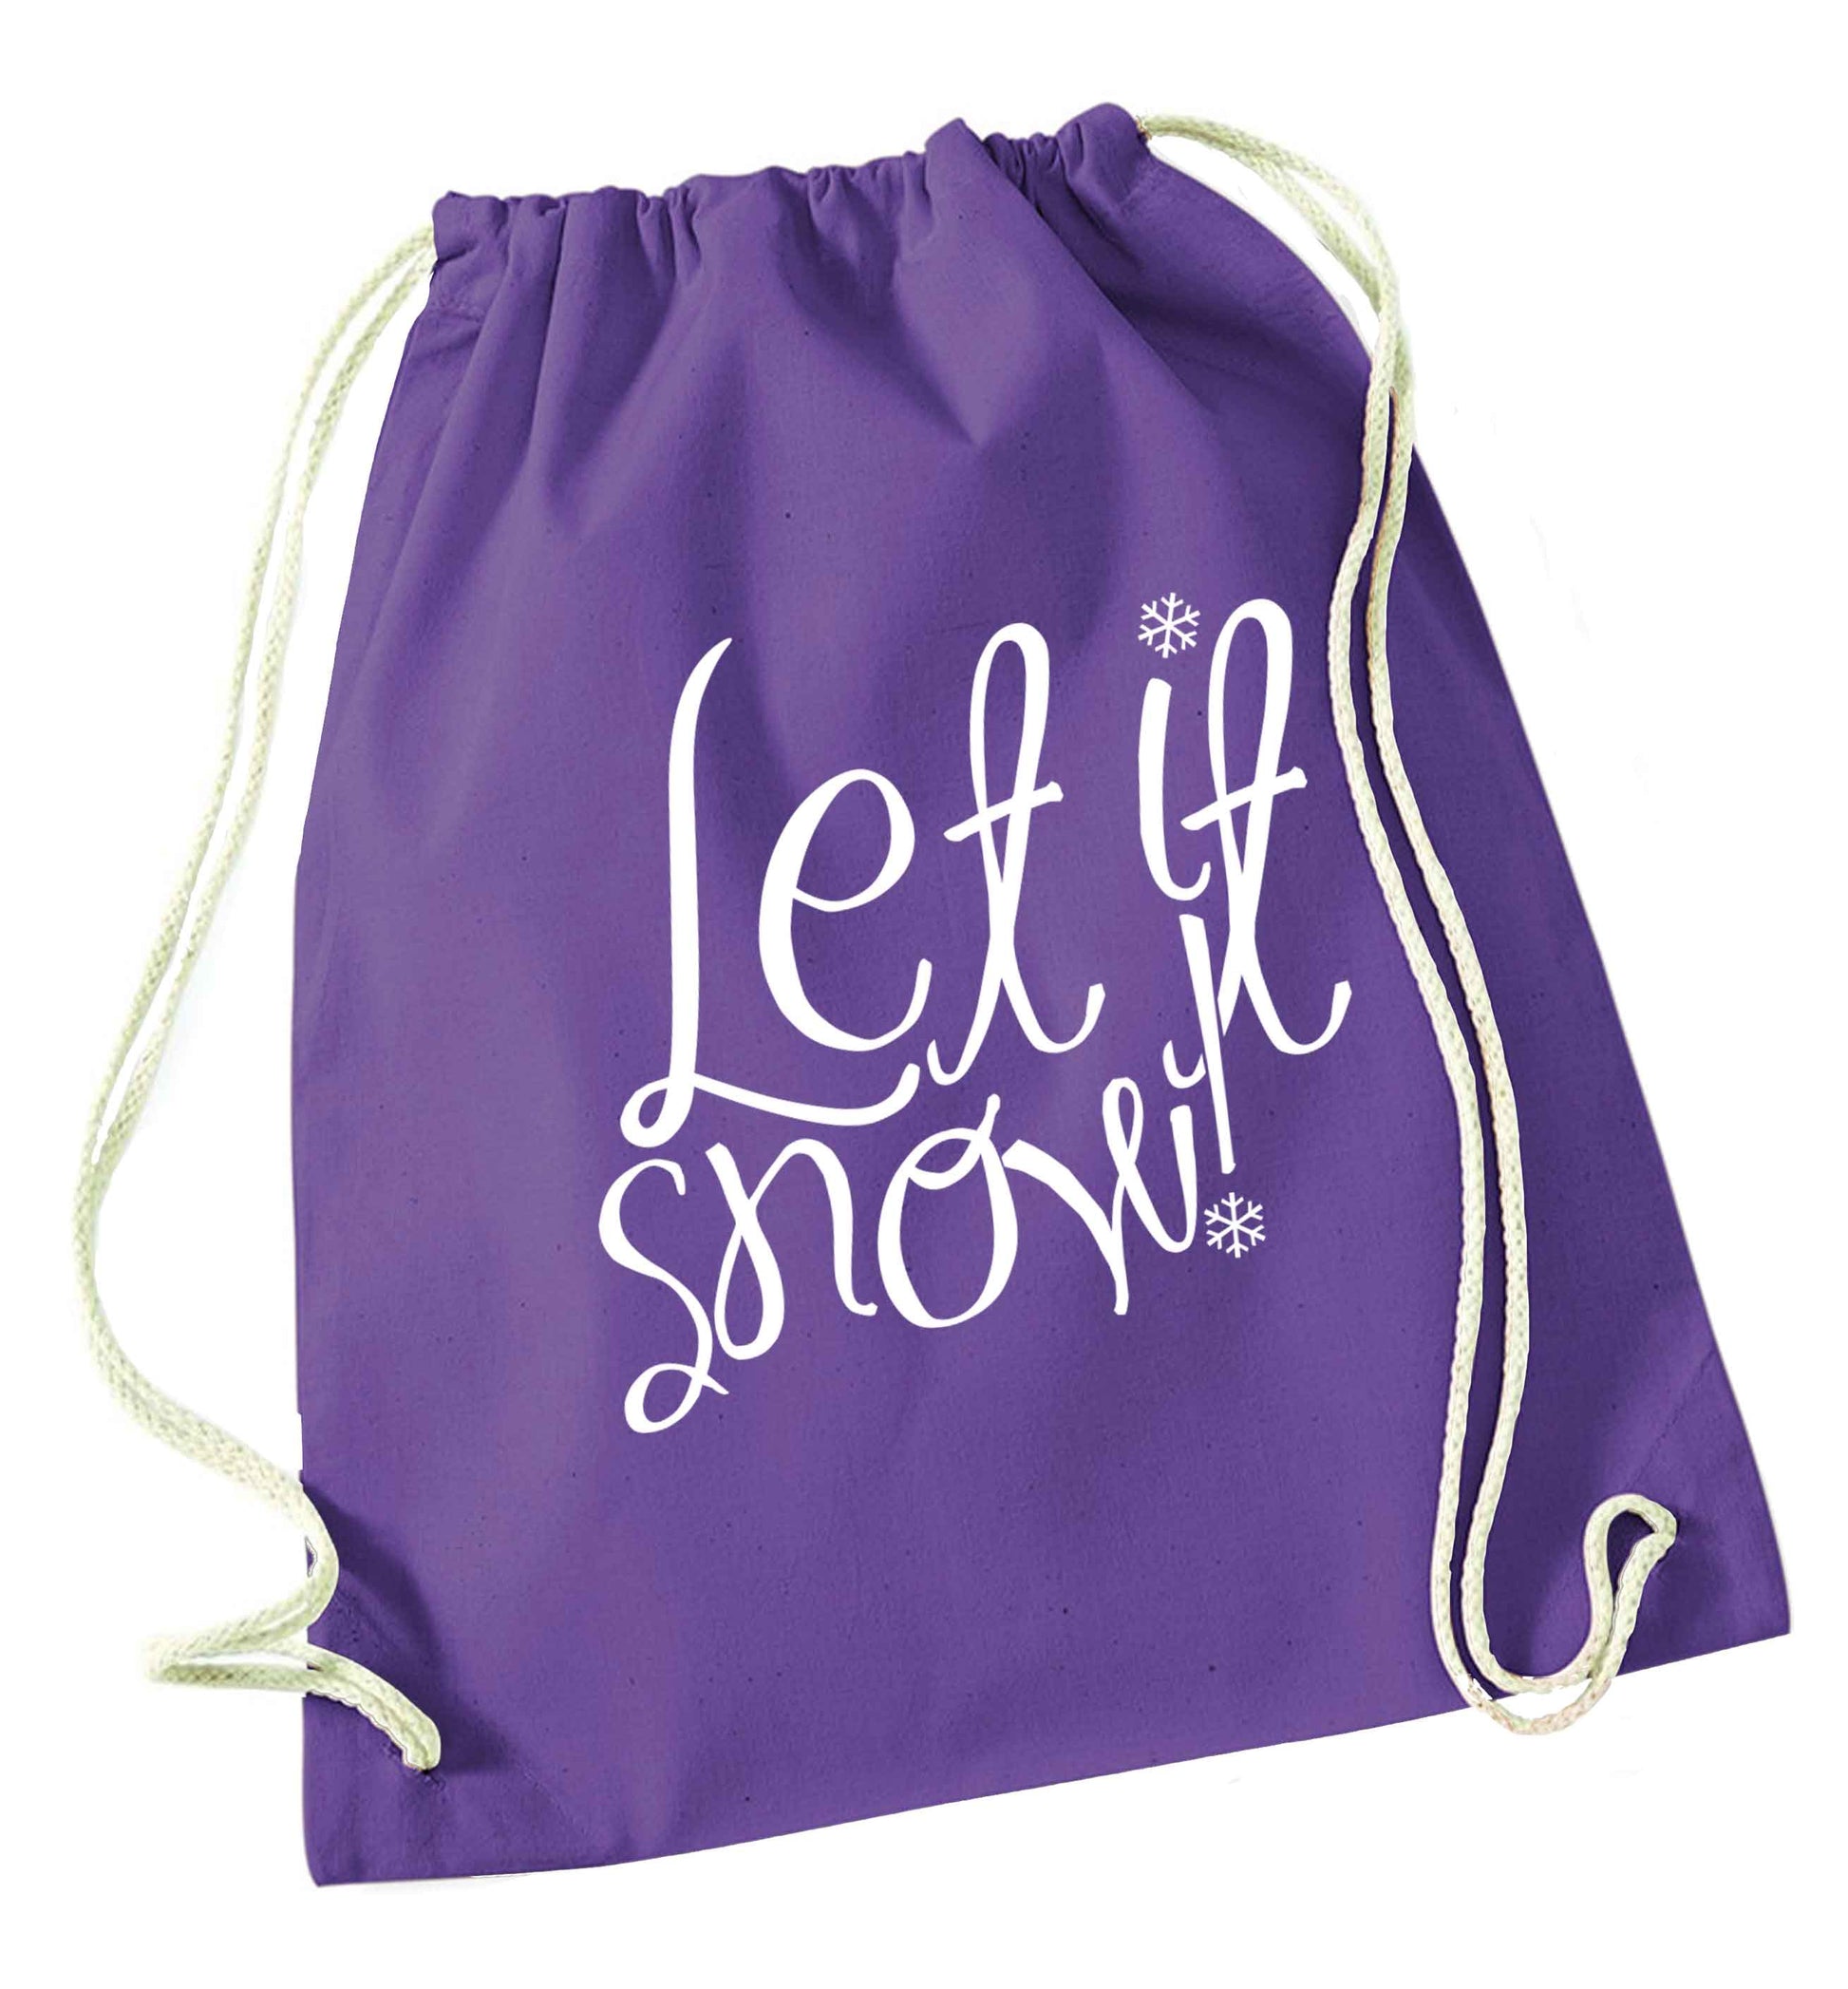 Let it snow purple drawstring bag